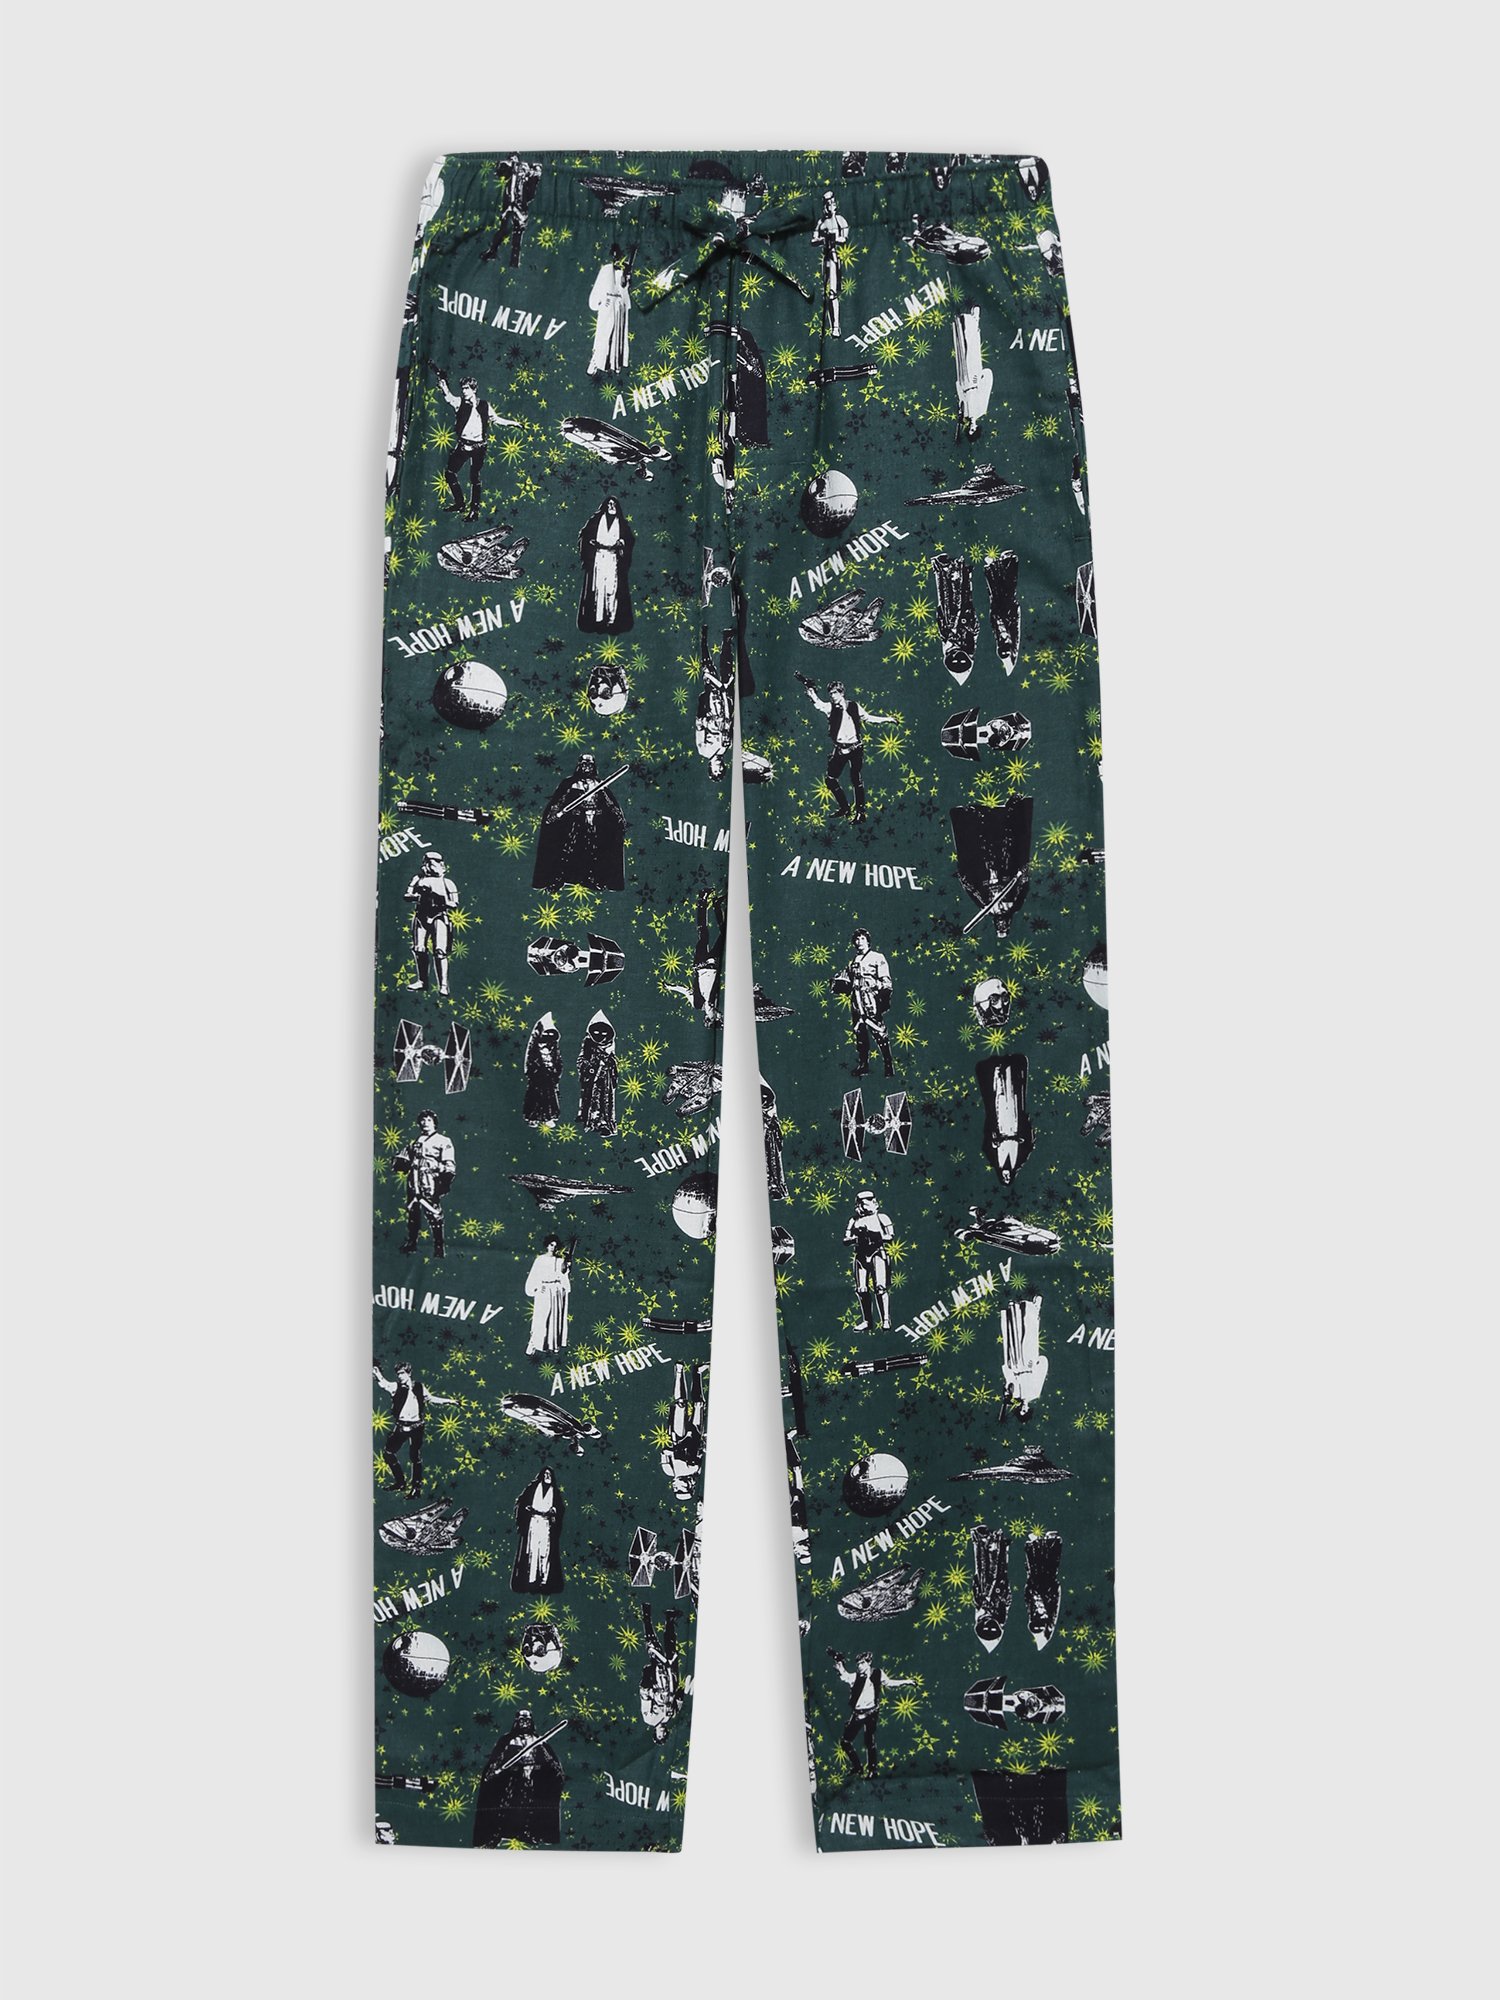 Flannel Star Wars:trade_mark: Pijama Altı product image